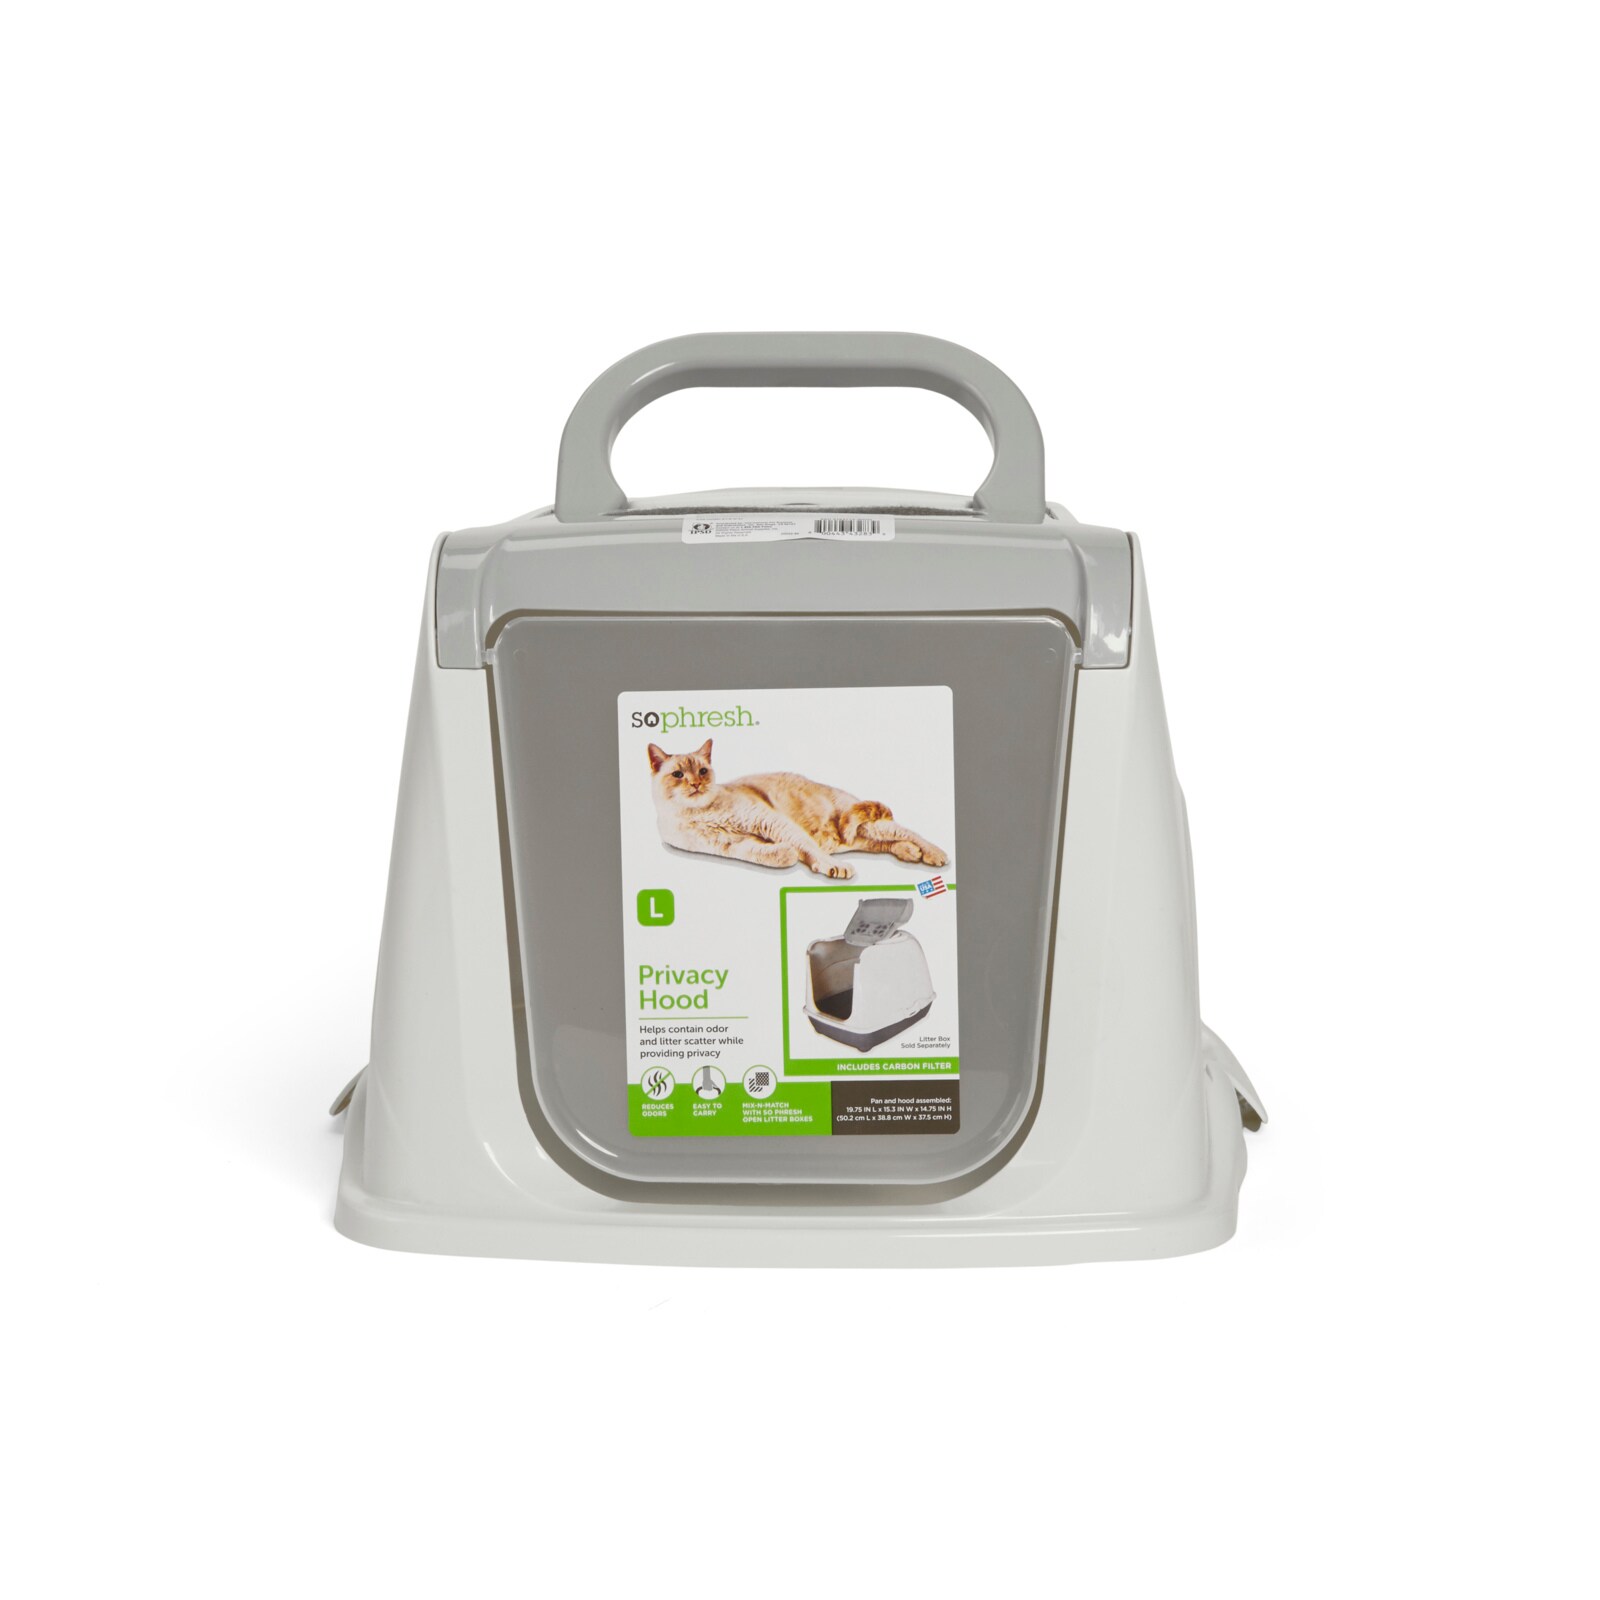 So Phresh Scatter Shield High-Back Litter Box in Gray, 24 L X 18 W X 10  H